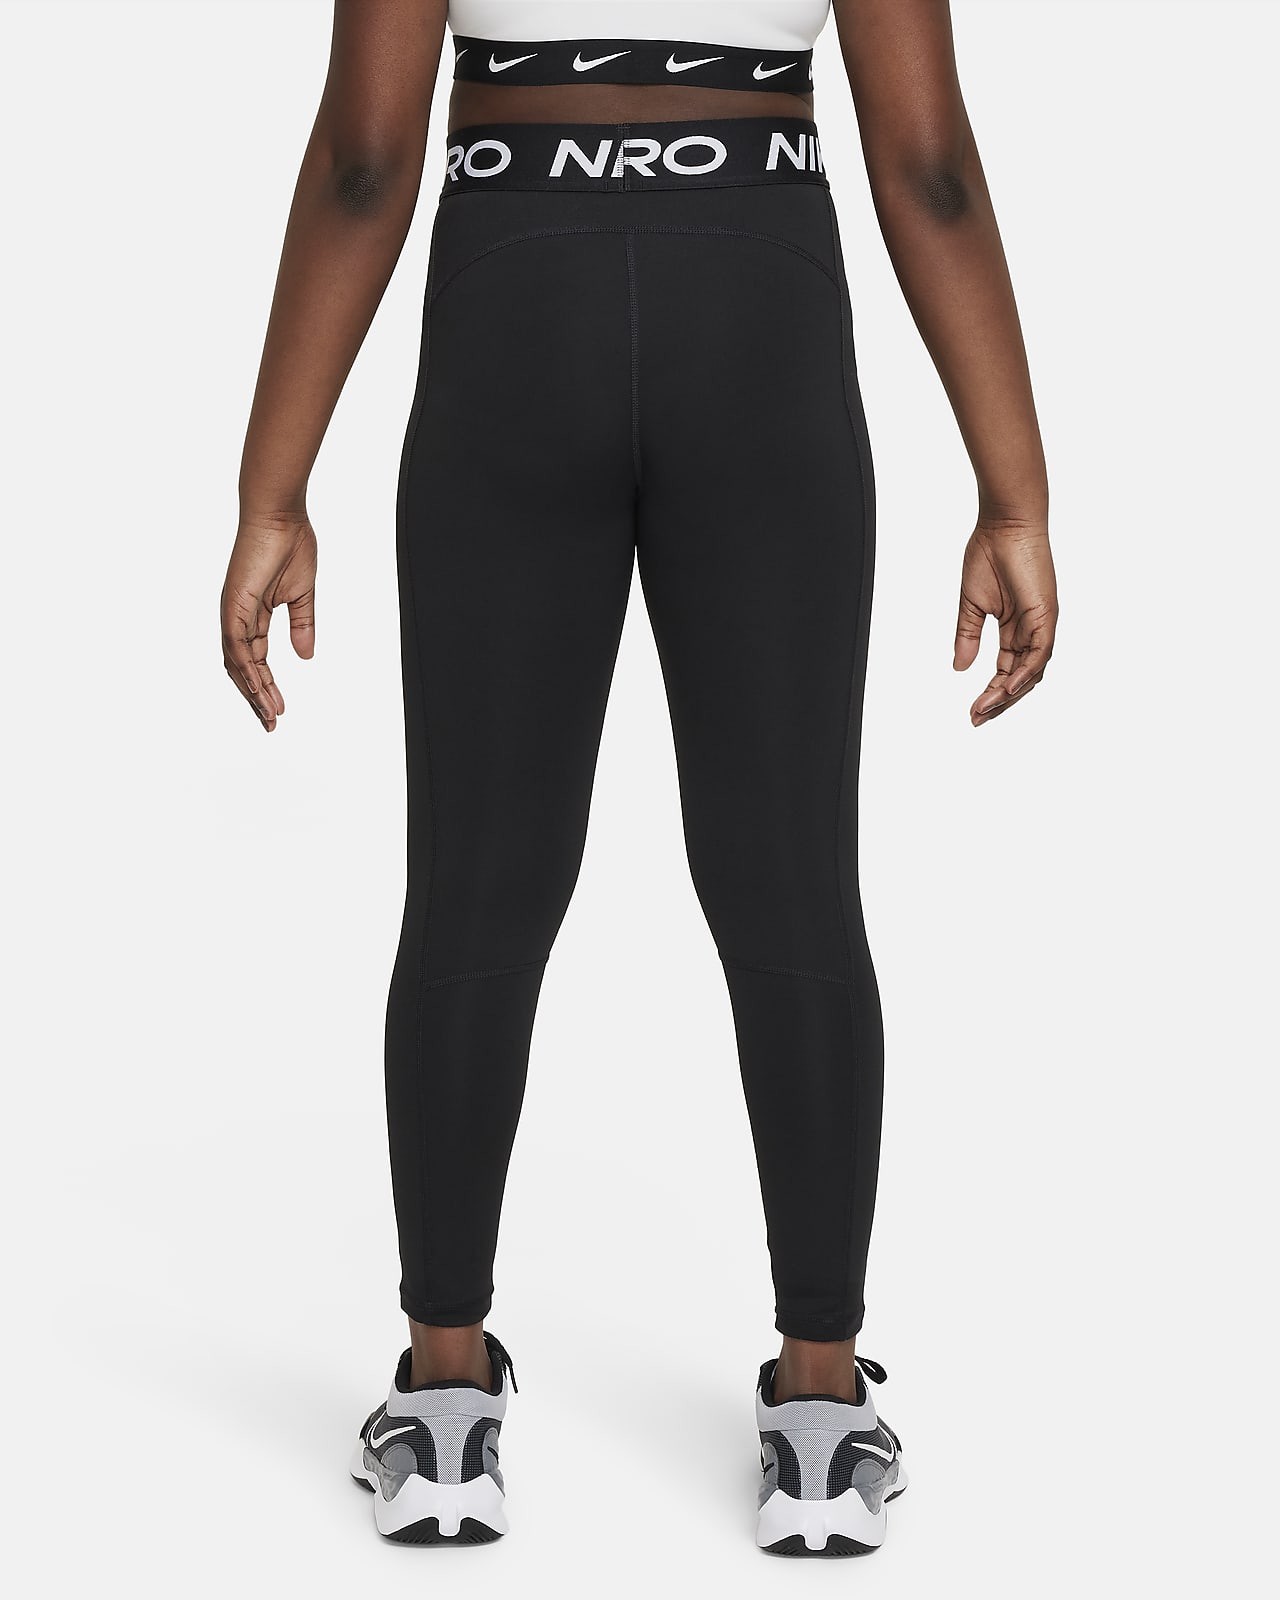 Nike Black Dri-Fit Leggings Size XS - $17 (66% Off Retail) - From